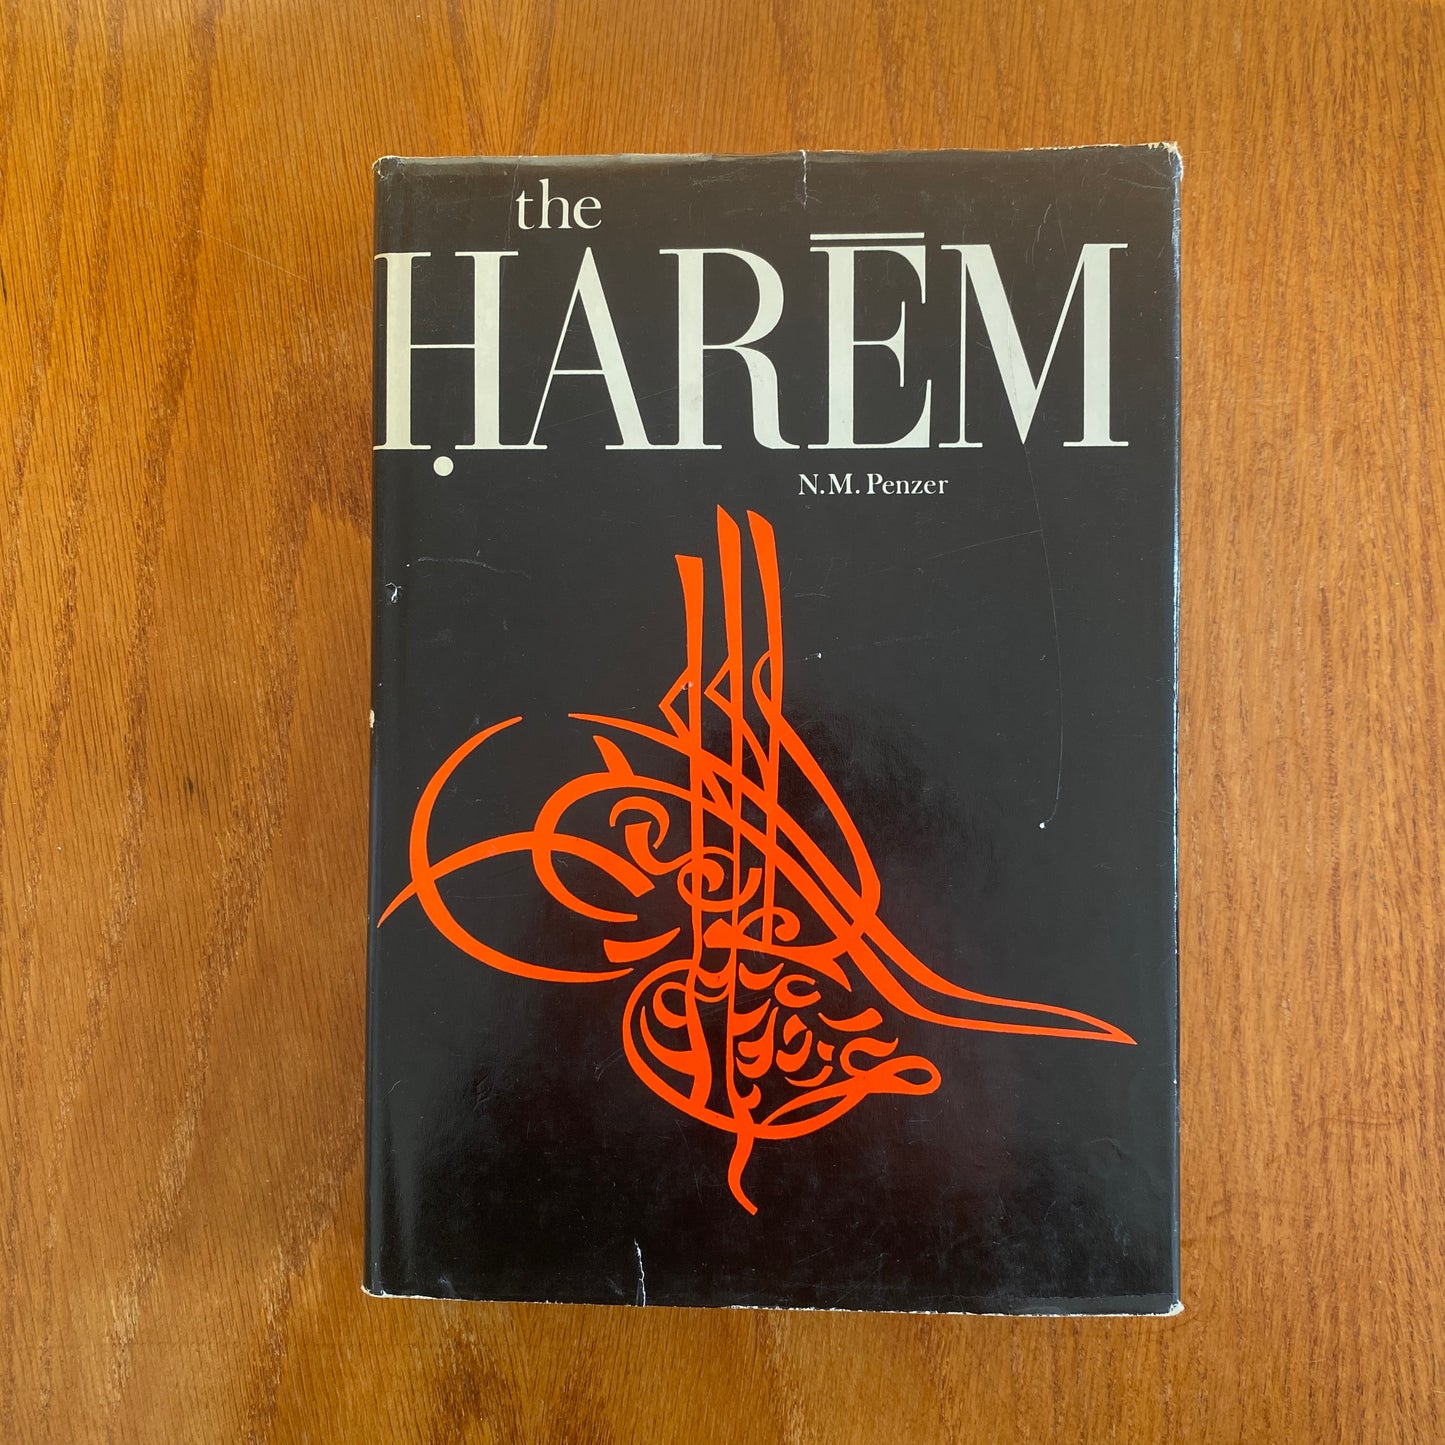 The Harem - N.M. Penzer